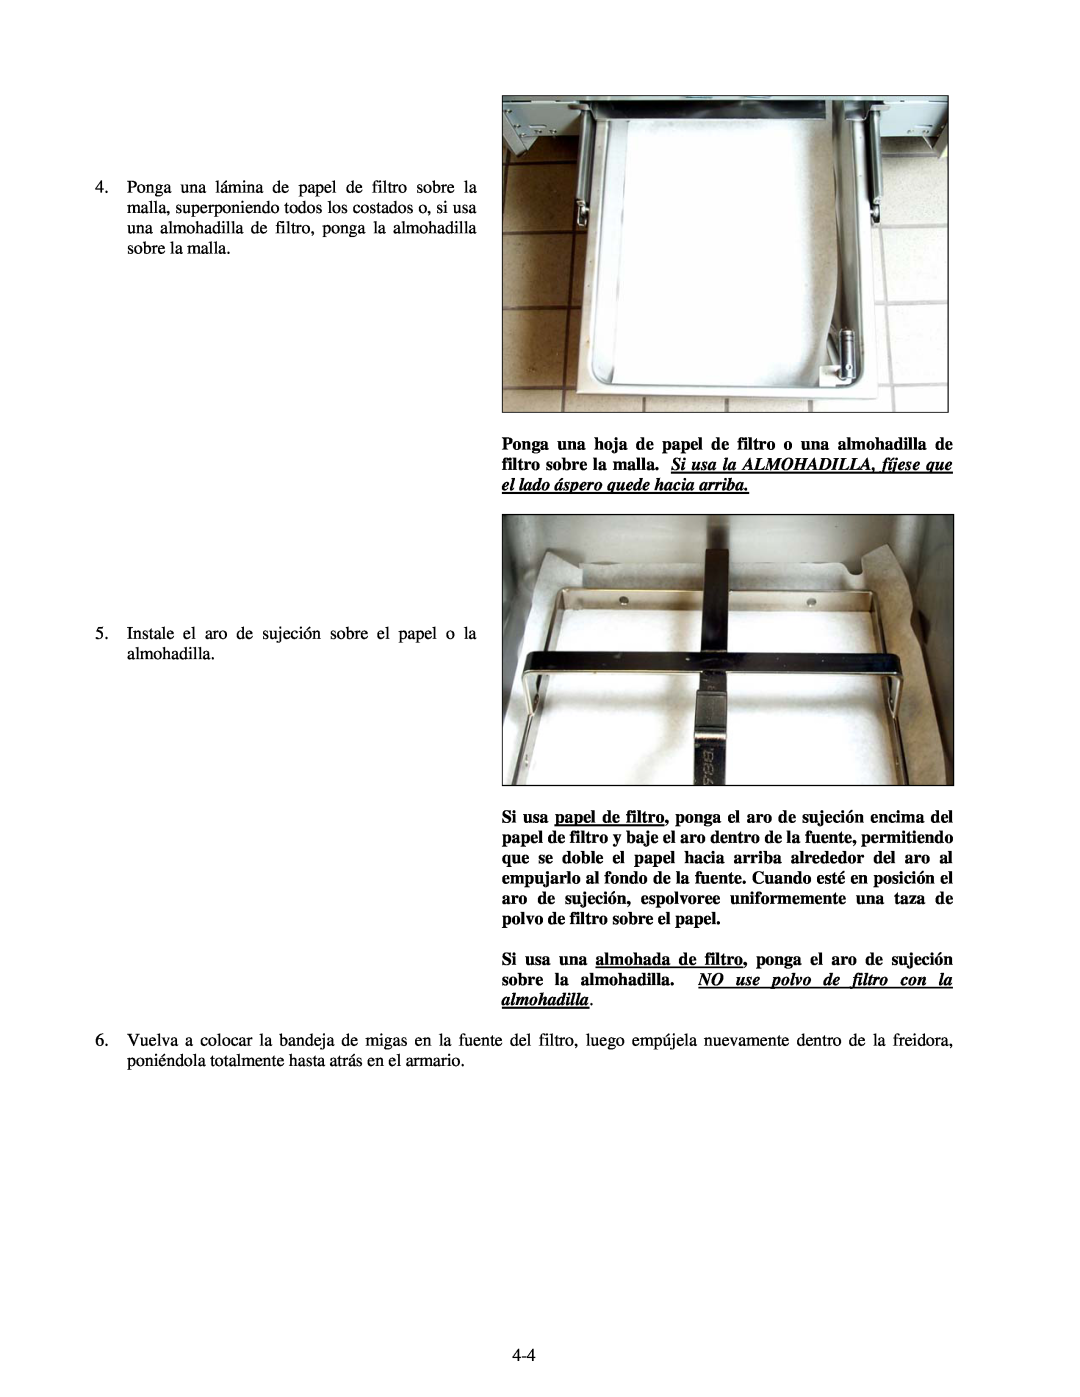 Frymaster H55 manual 